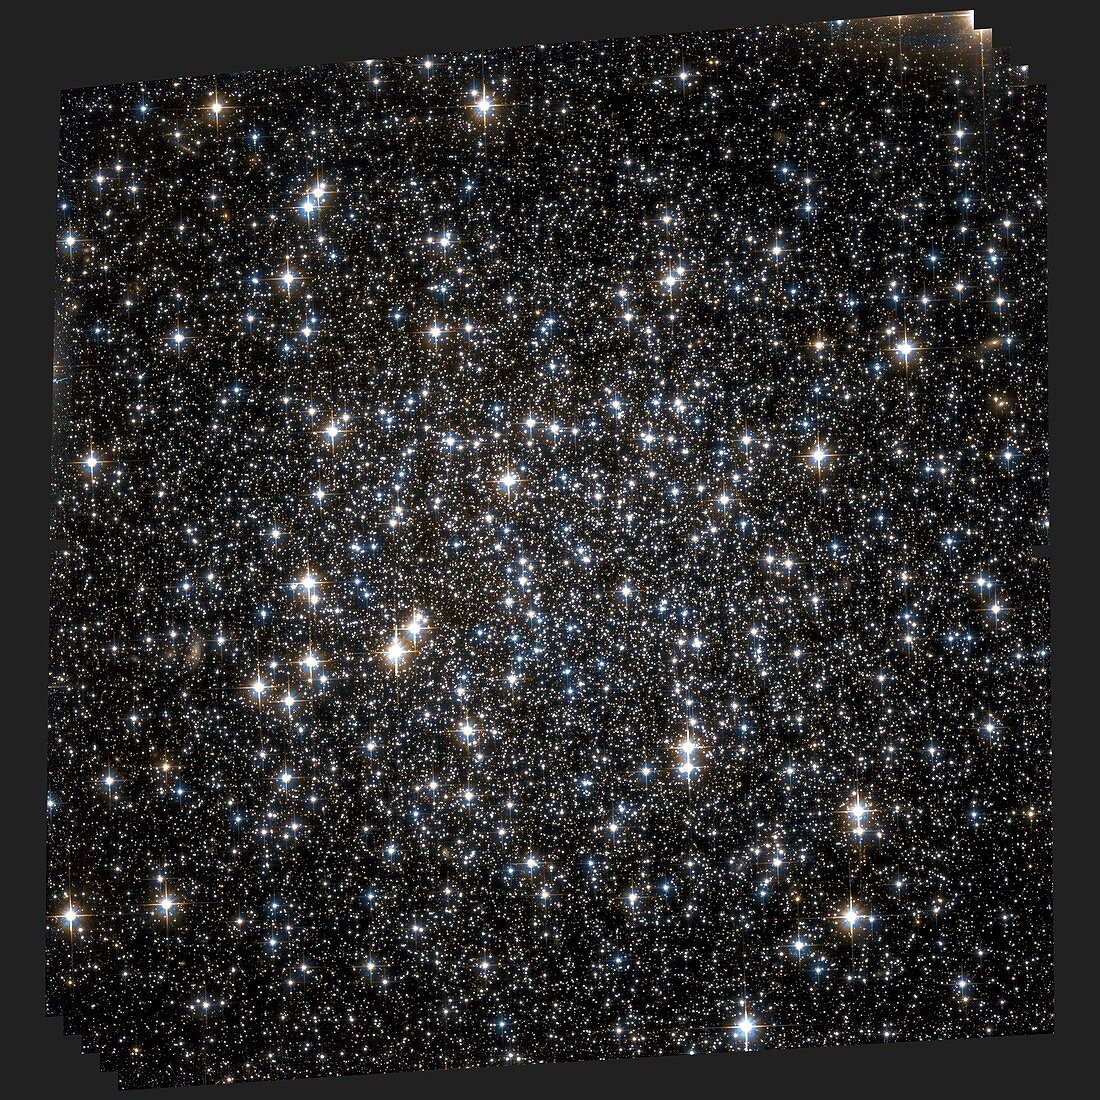 Globular star cluster NGC 6101